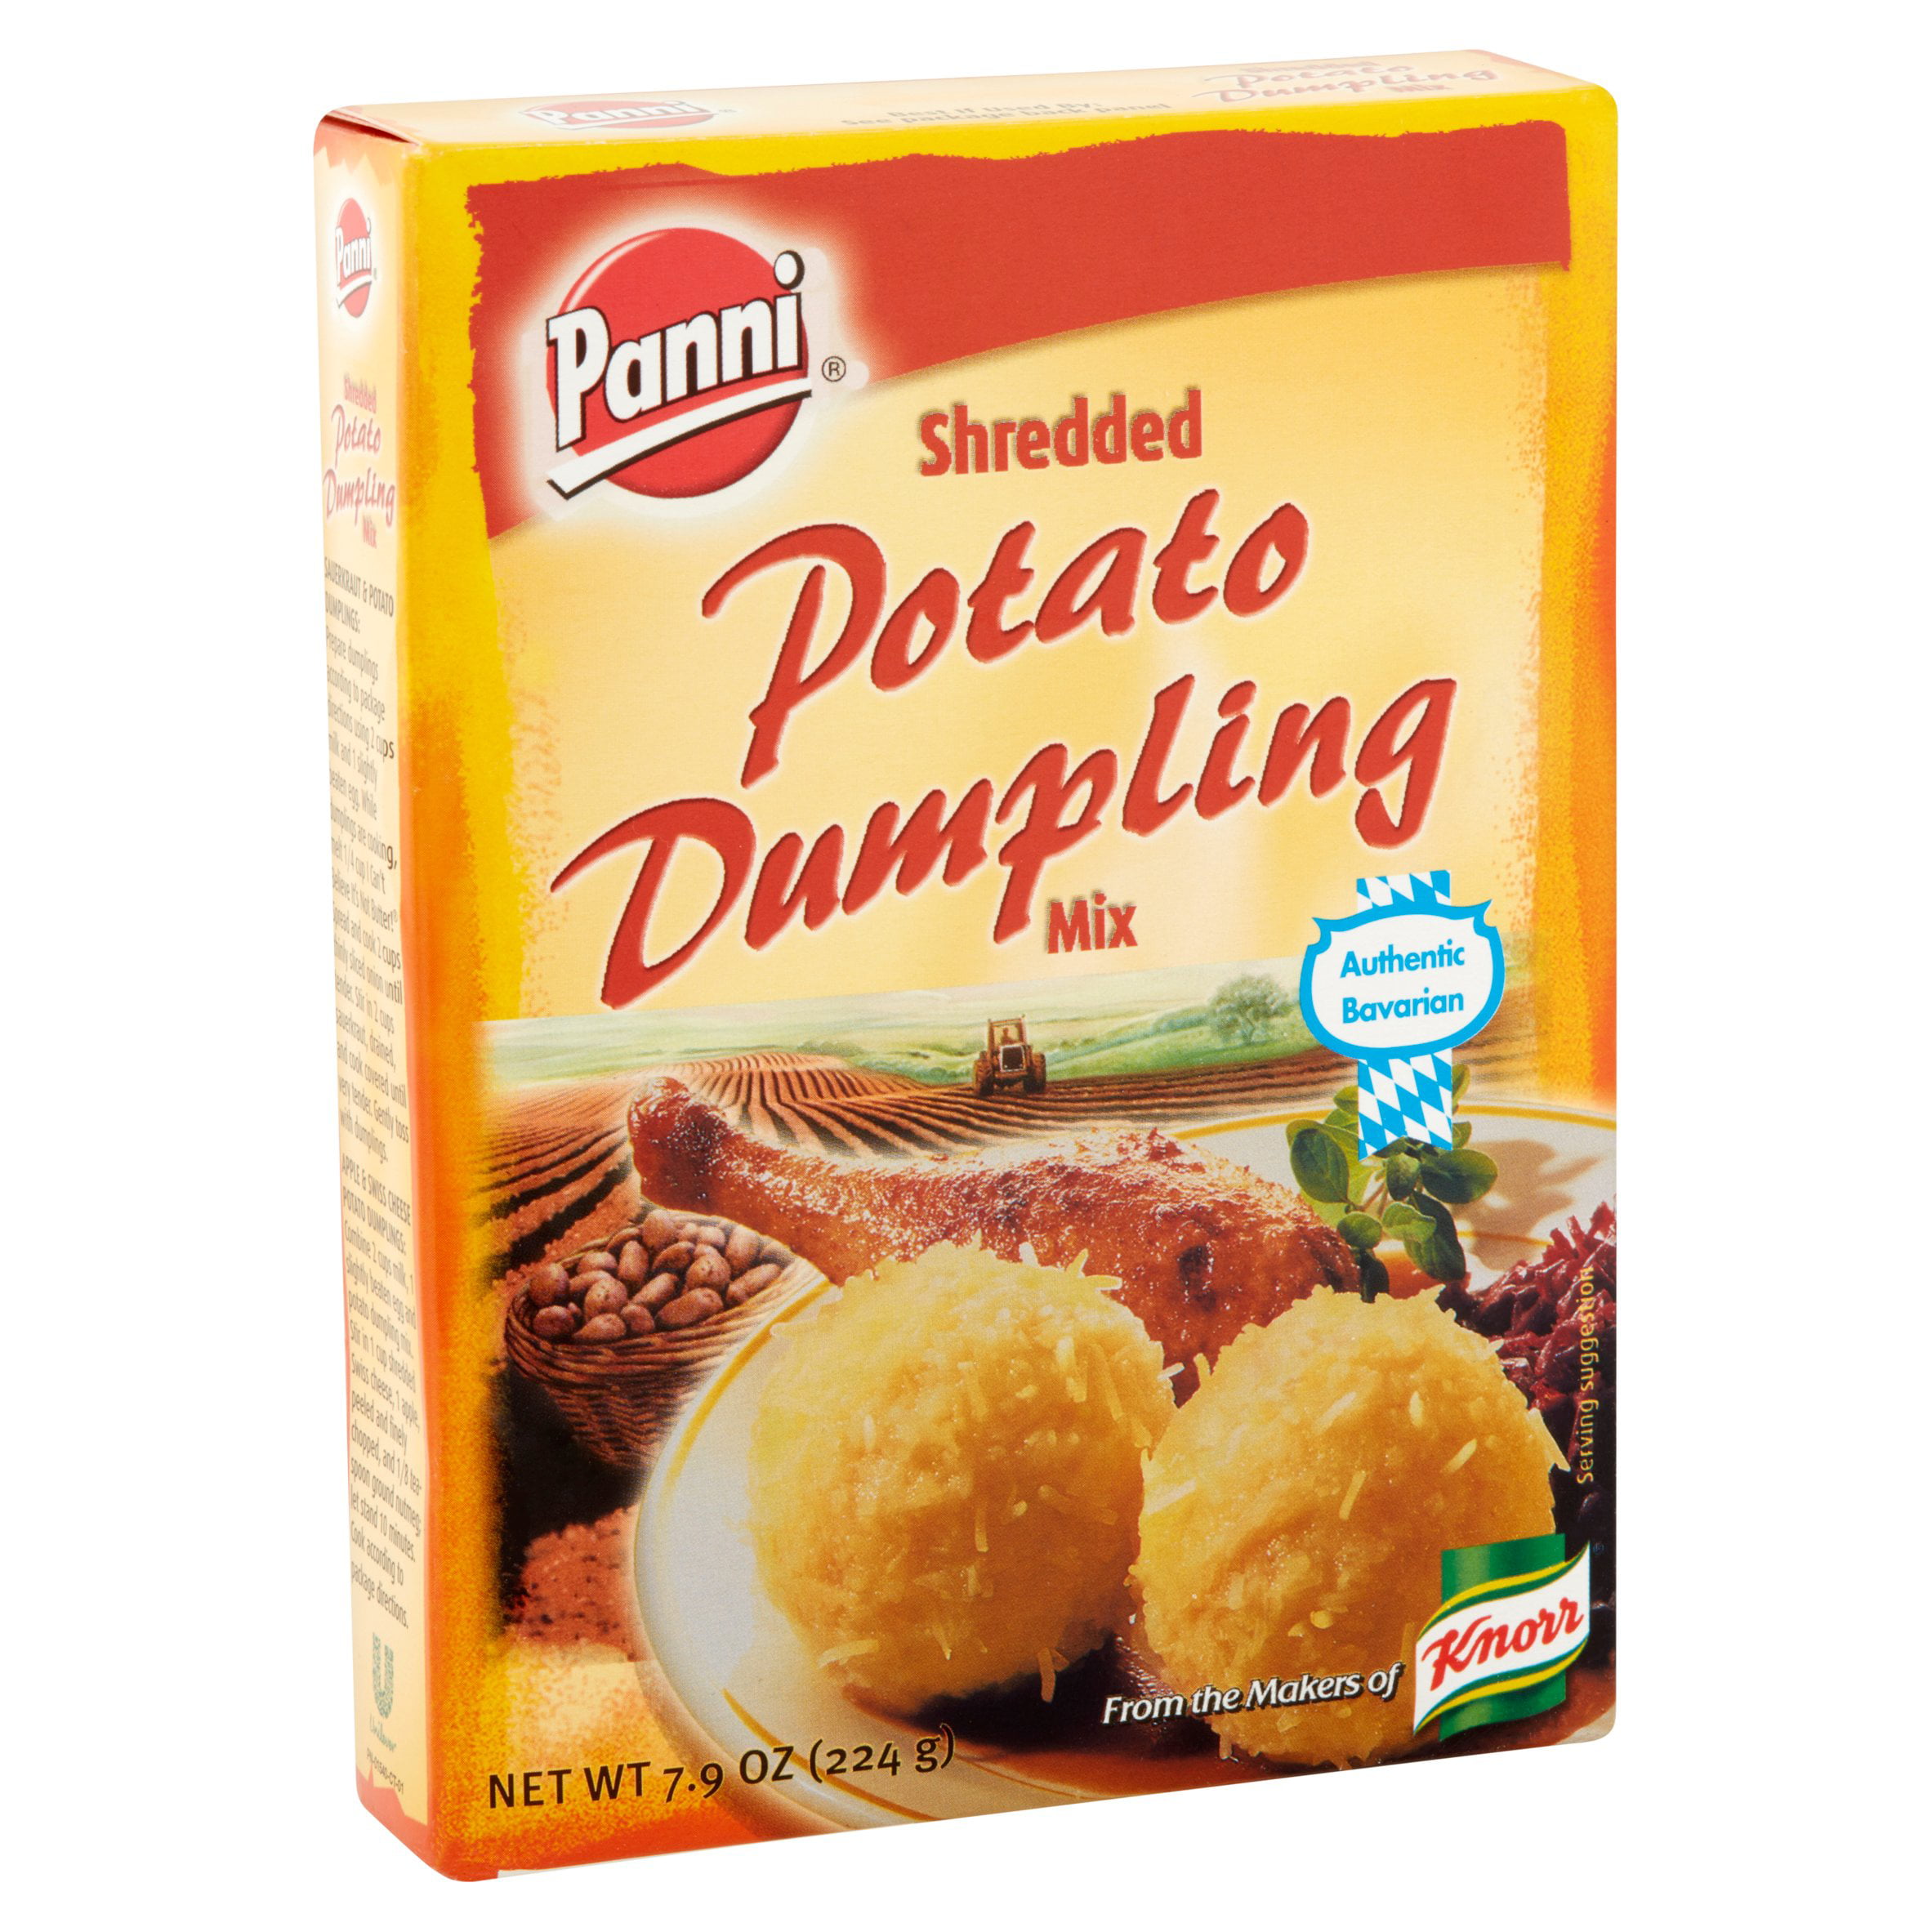 Panni Shredded Potato Dumpling Mix, 7.9 oz